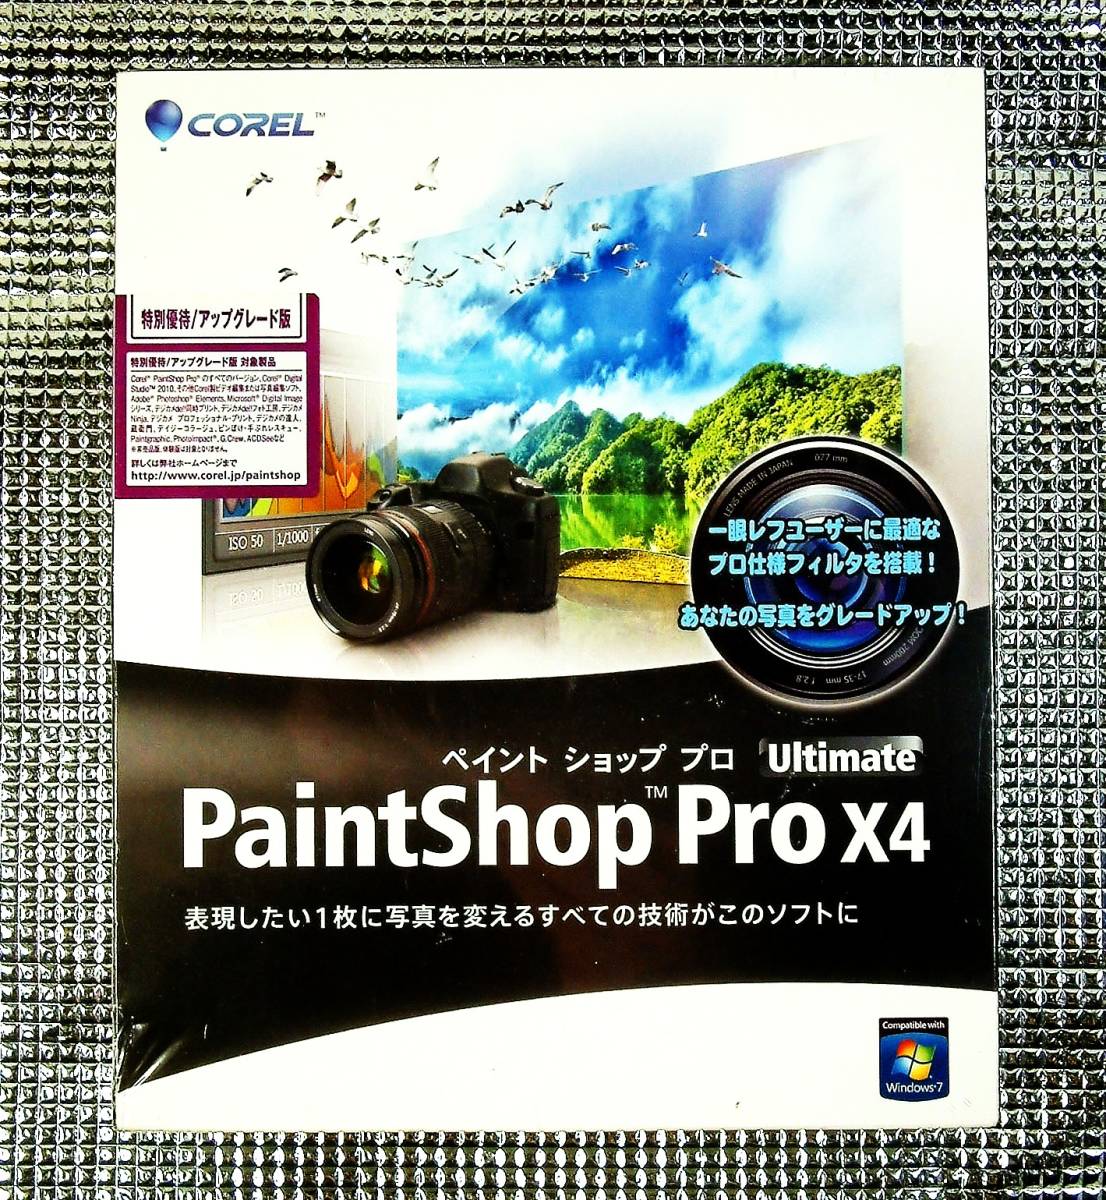 【4504】Corel PaintShop Pro X4 Ultimate コーレル ペイント ショップ プロ 画像編集ソフト ペイントショップ HDR合成 Nik Color Efex Pro